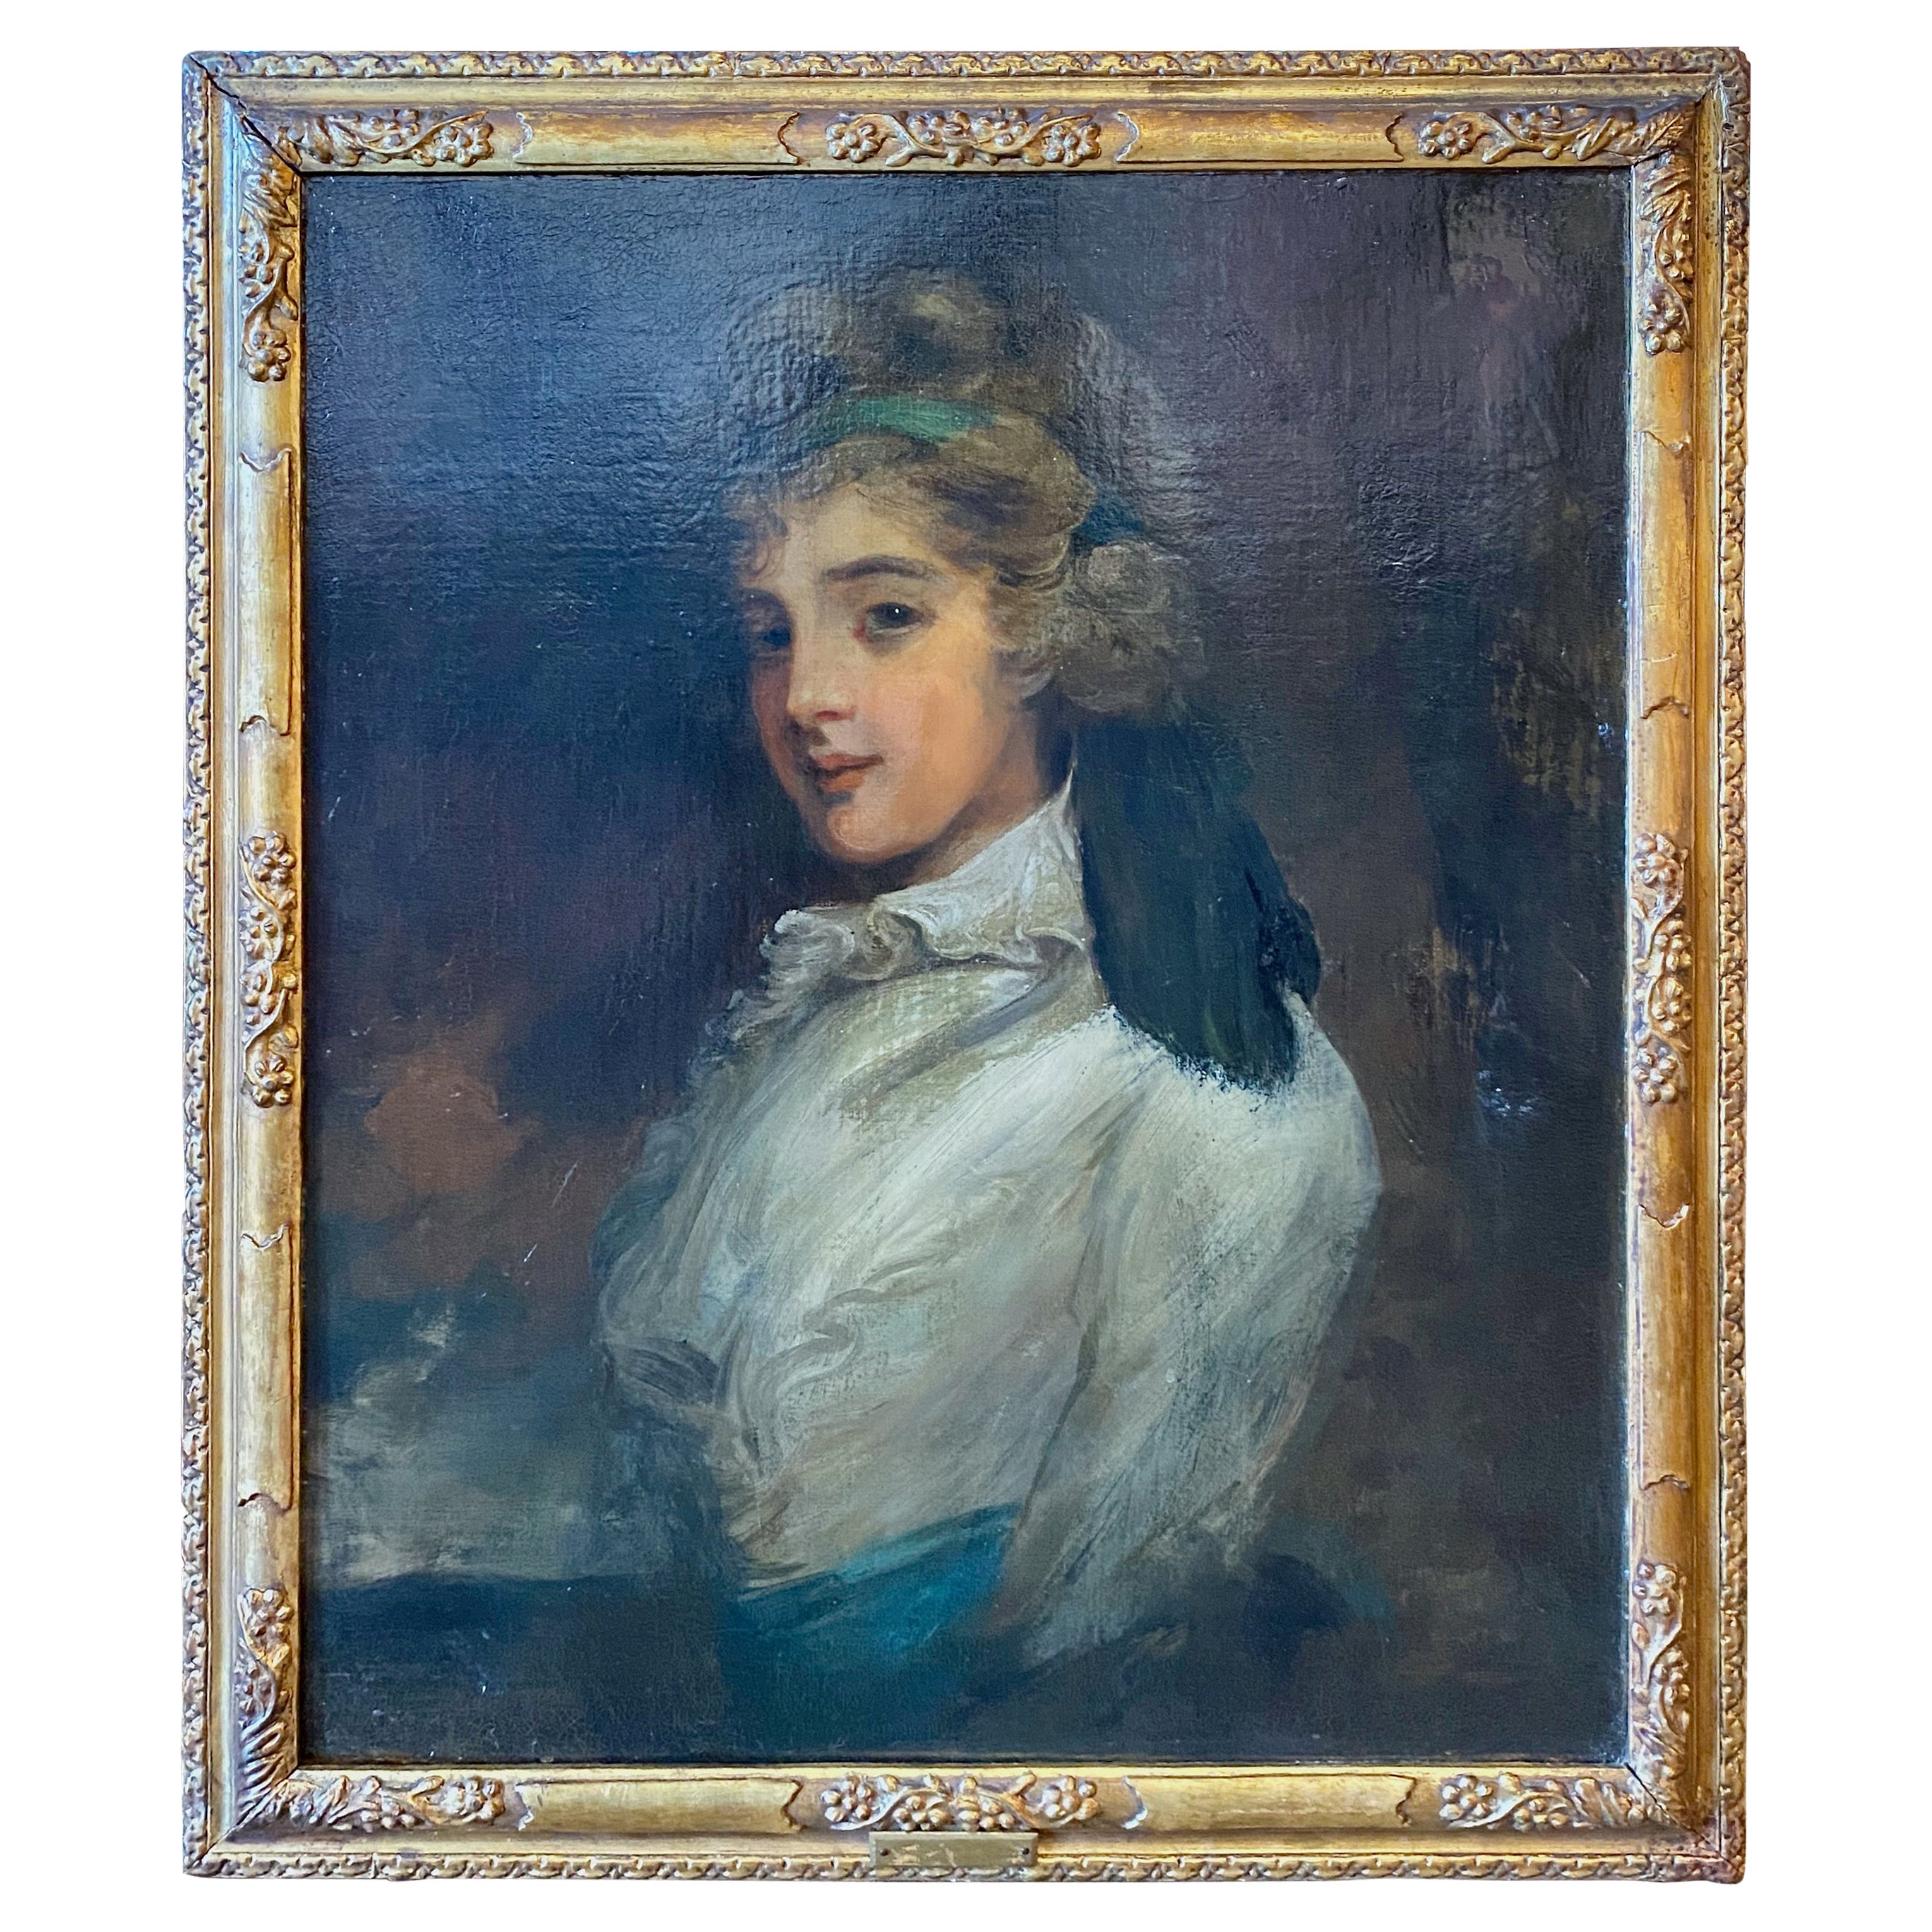 Regency-Porträt einer Dandy, ca. 1800-1815